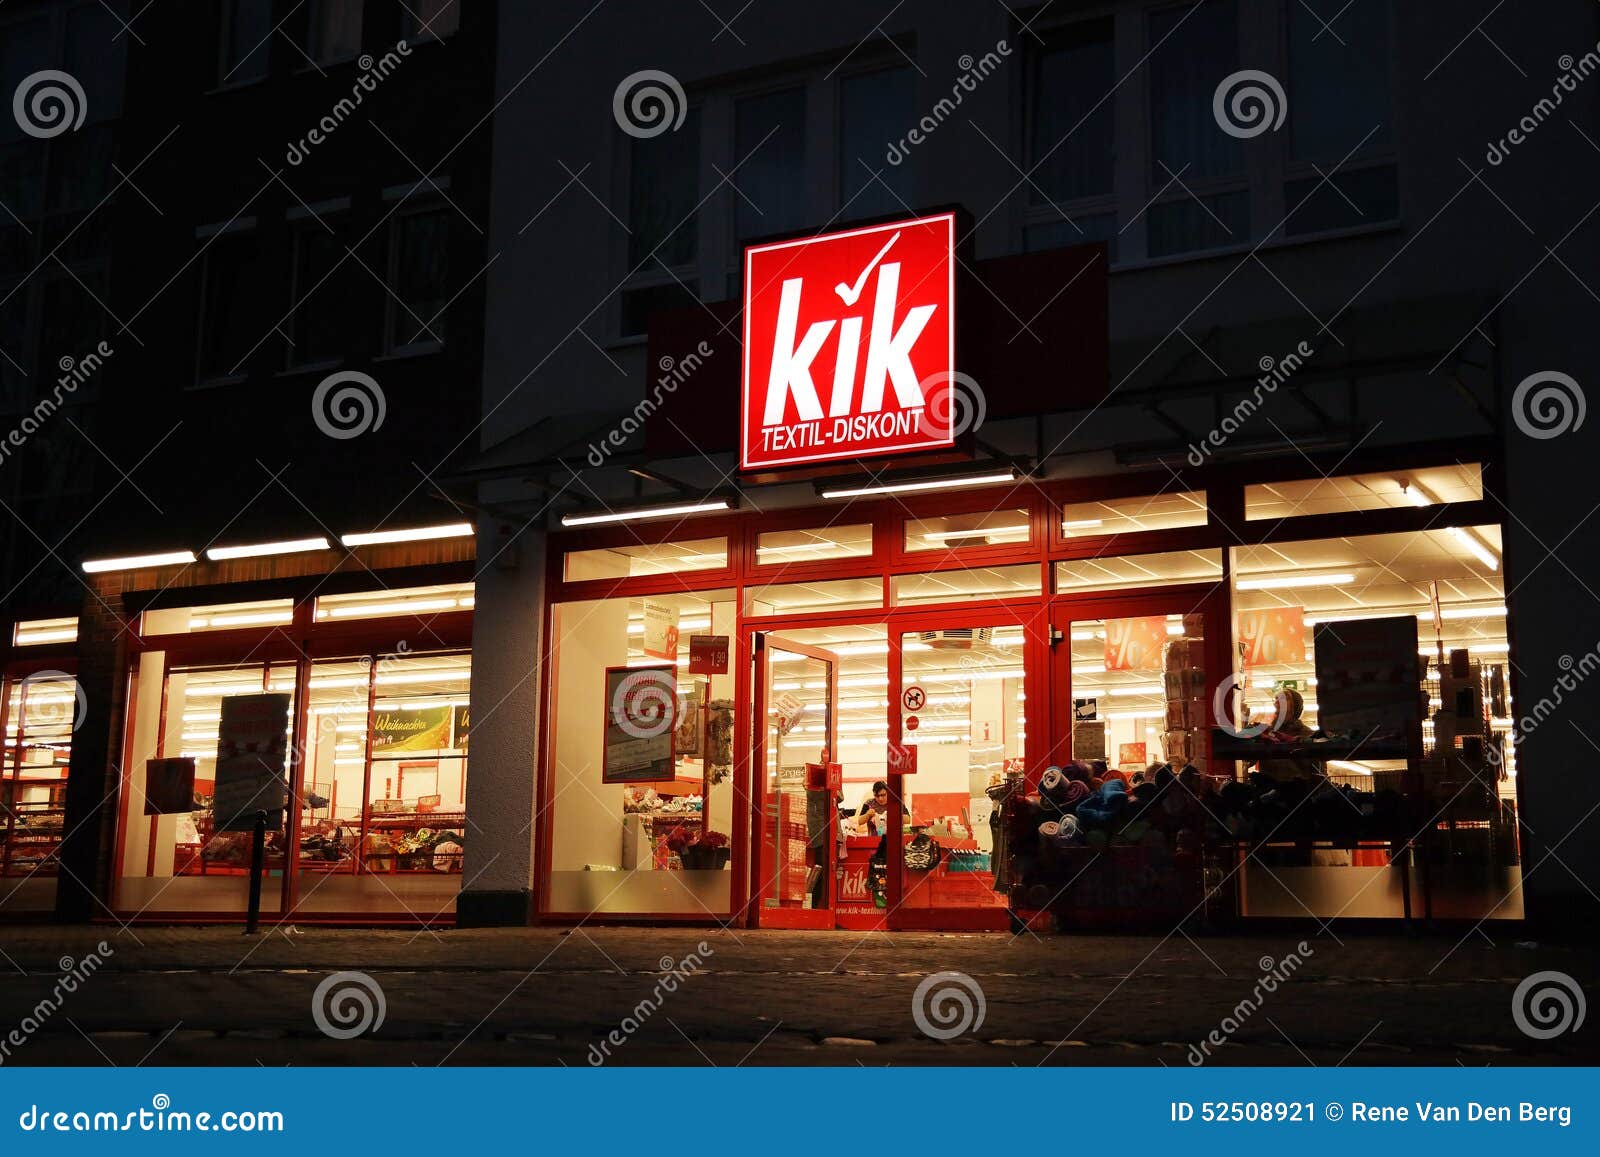 KiK textil-diskont store Image of - 52508921